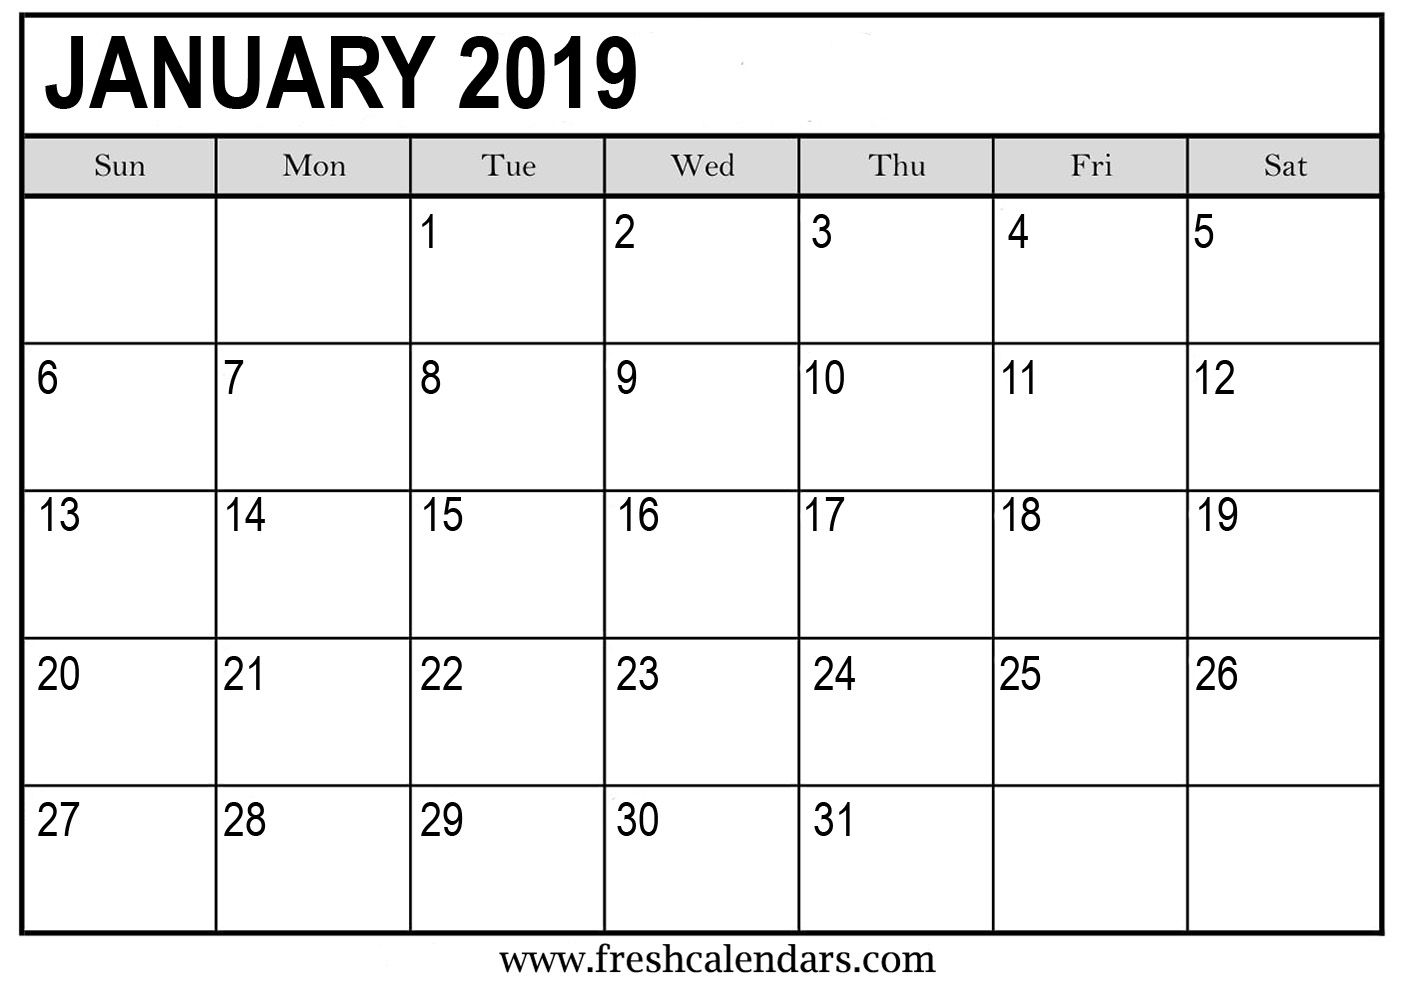 january-2019-calendar-printable-templates